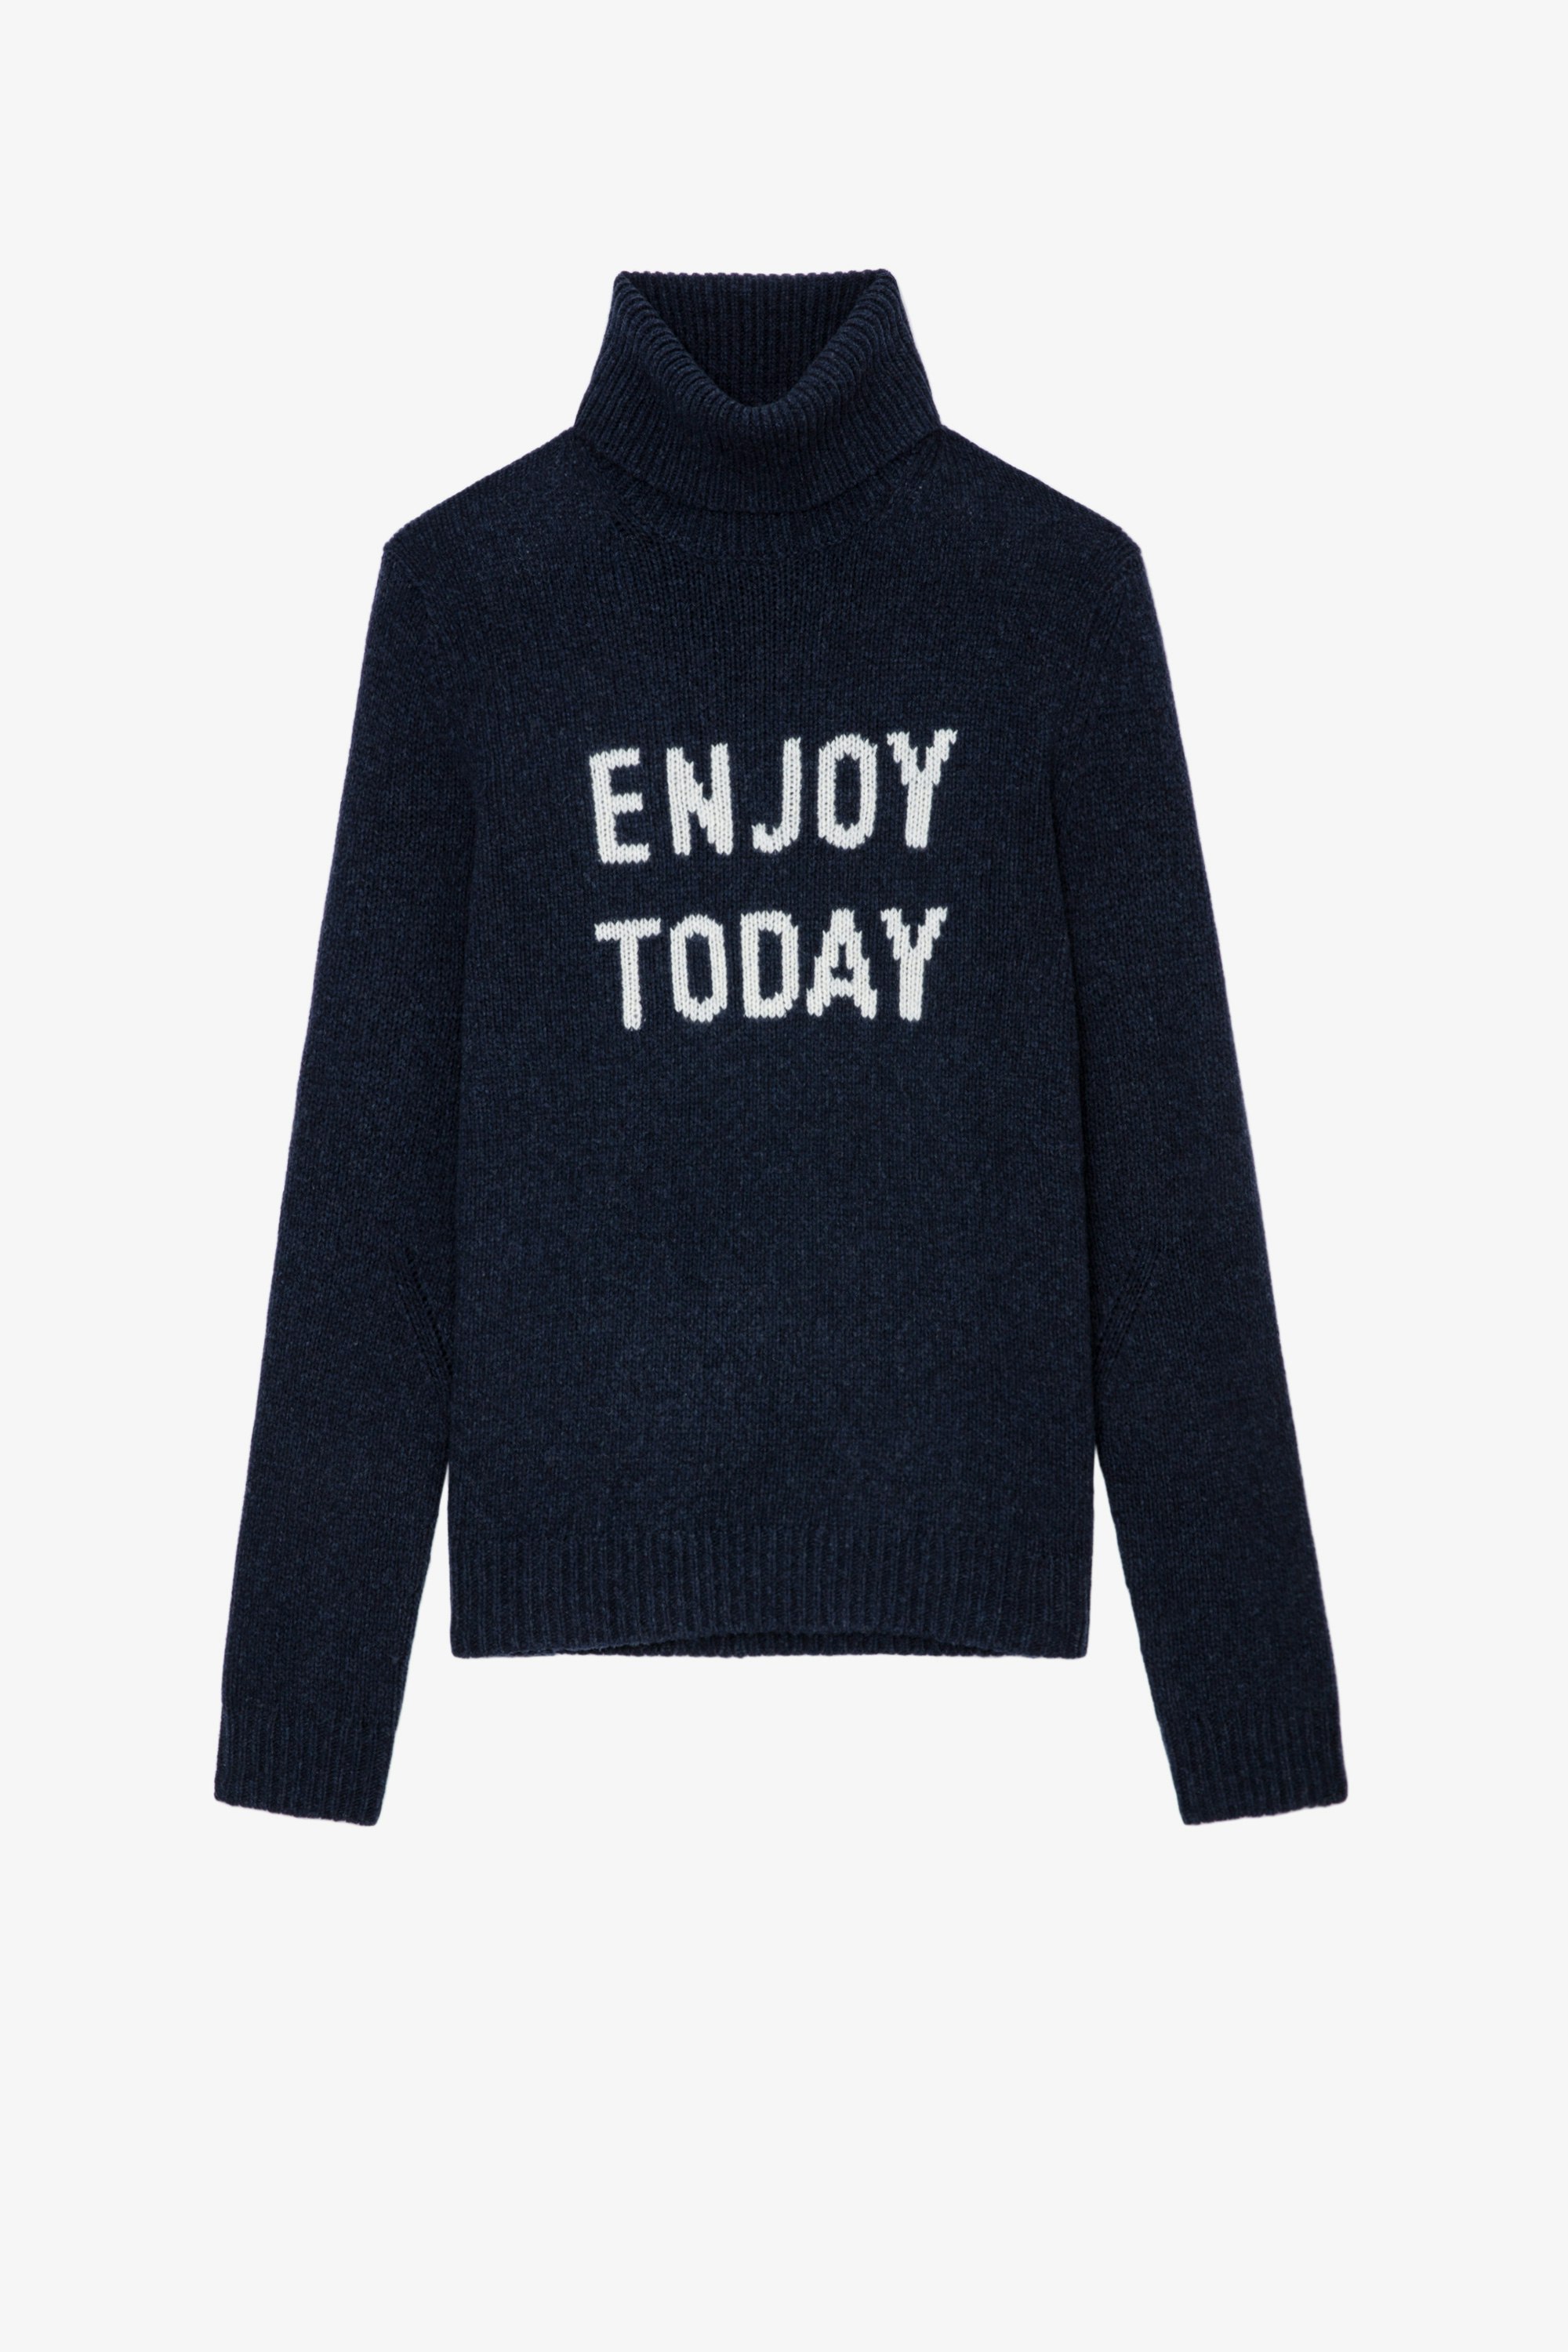 Enjoy Today Bobby Jumper Men’s navy blue wool turtleneck jumper with ‘Enjoy today’ inscription